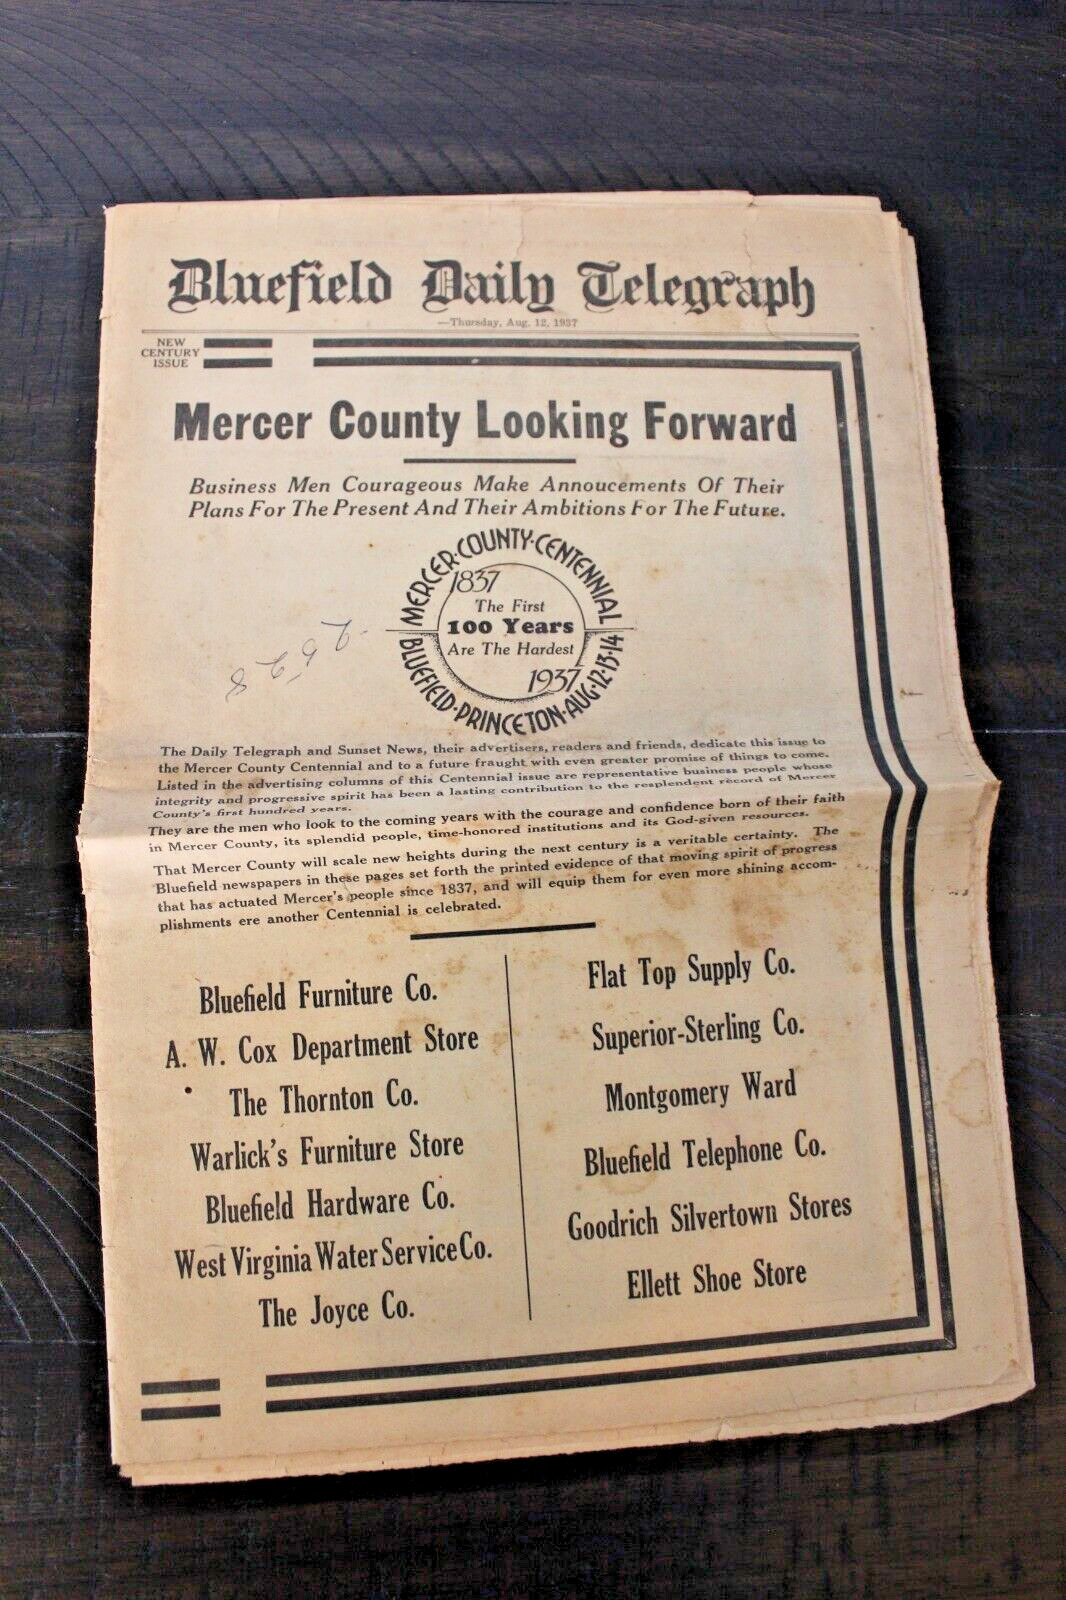 Bluefield Daily Telegraph Aug. 12 1937 West Virginia Advertisements Newspaper